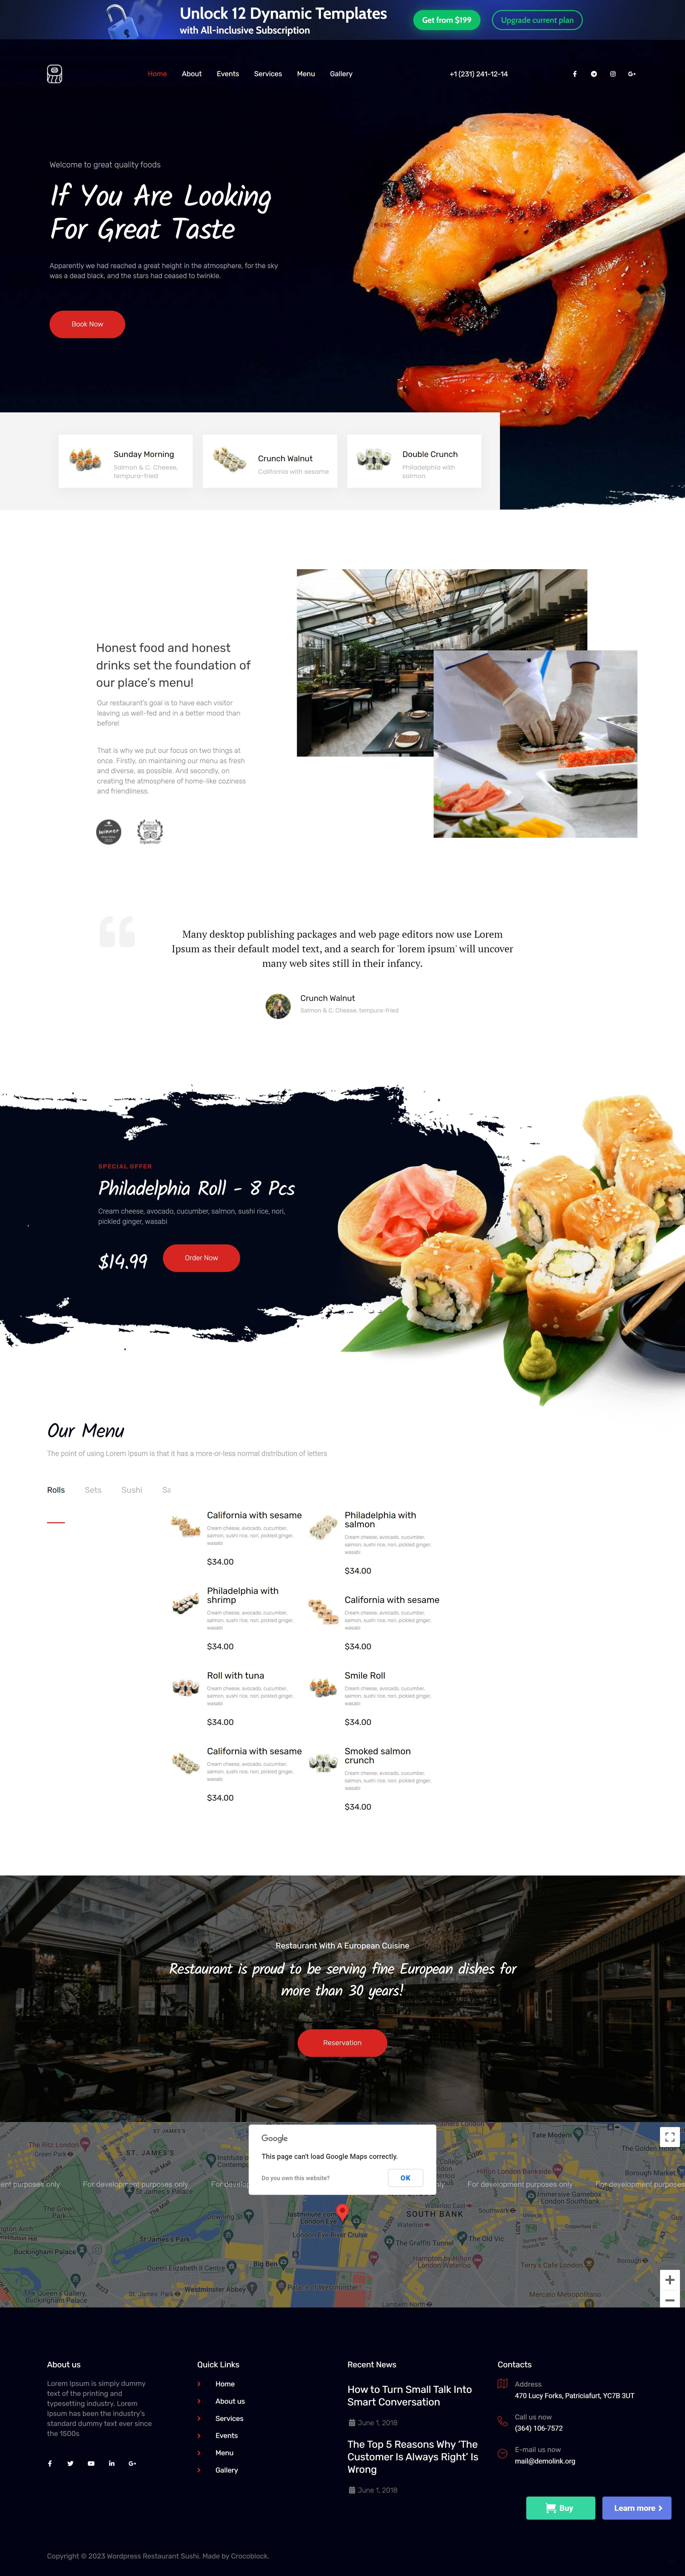 Mẫu thiết kế website Nhà hàng đẹp 20 demo_crocoblock.com/grandecuis/